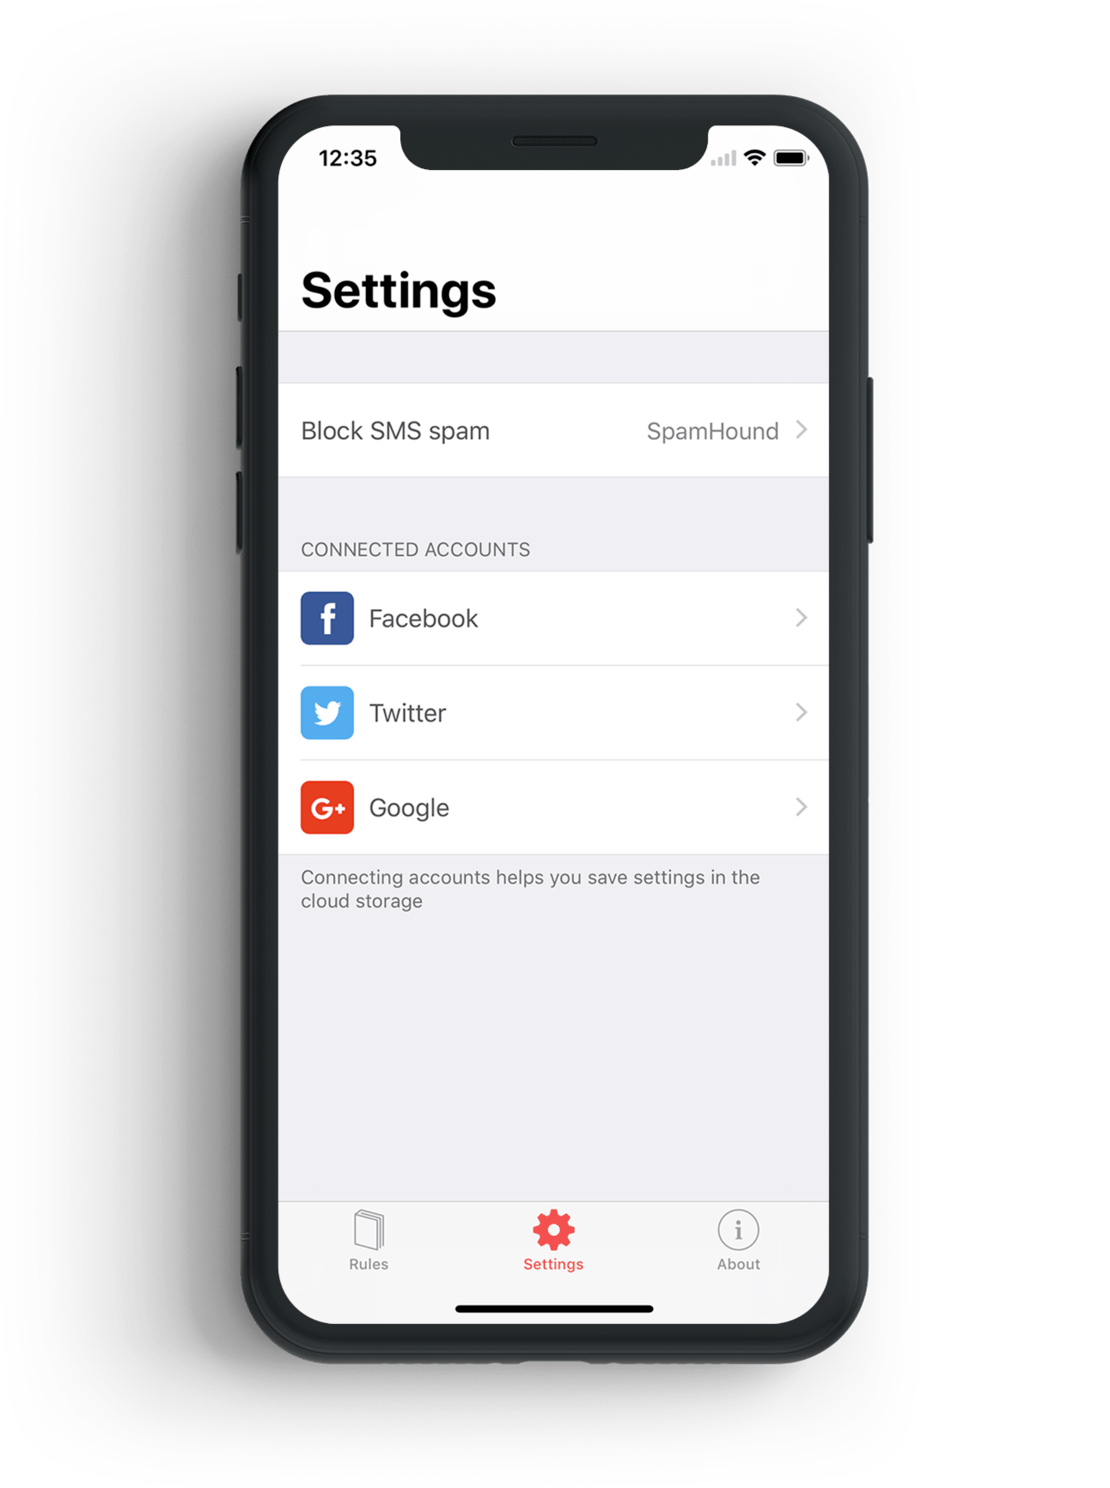 iPhone spam filter app CallHound - Settings screen